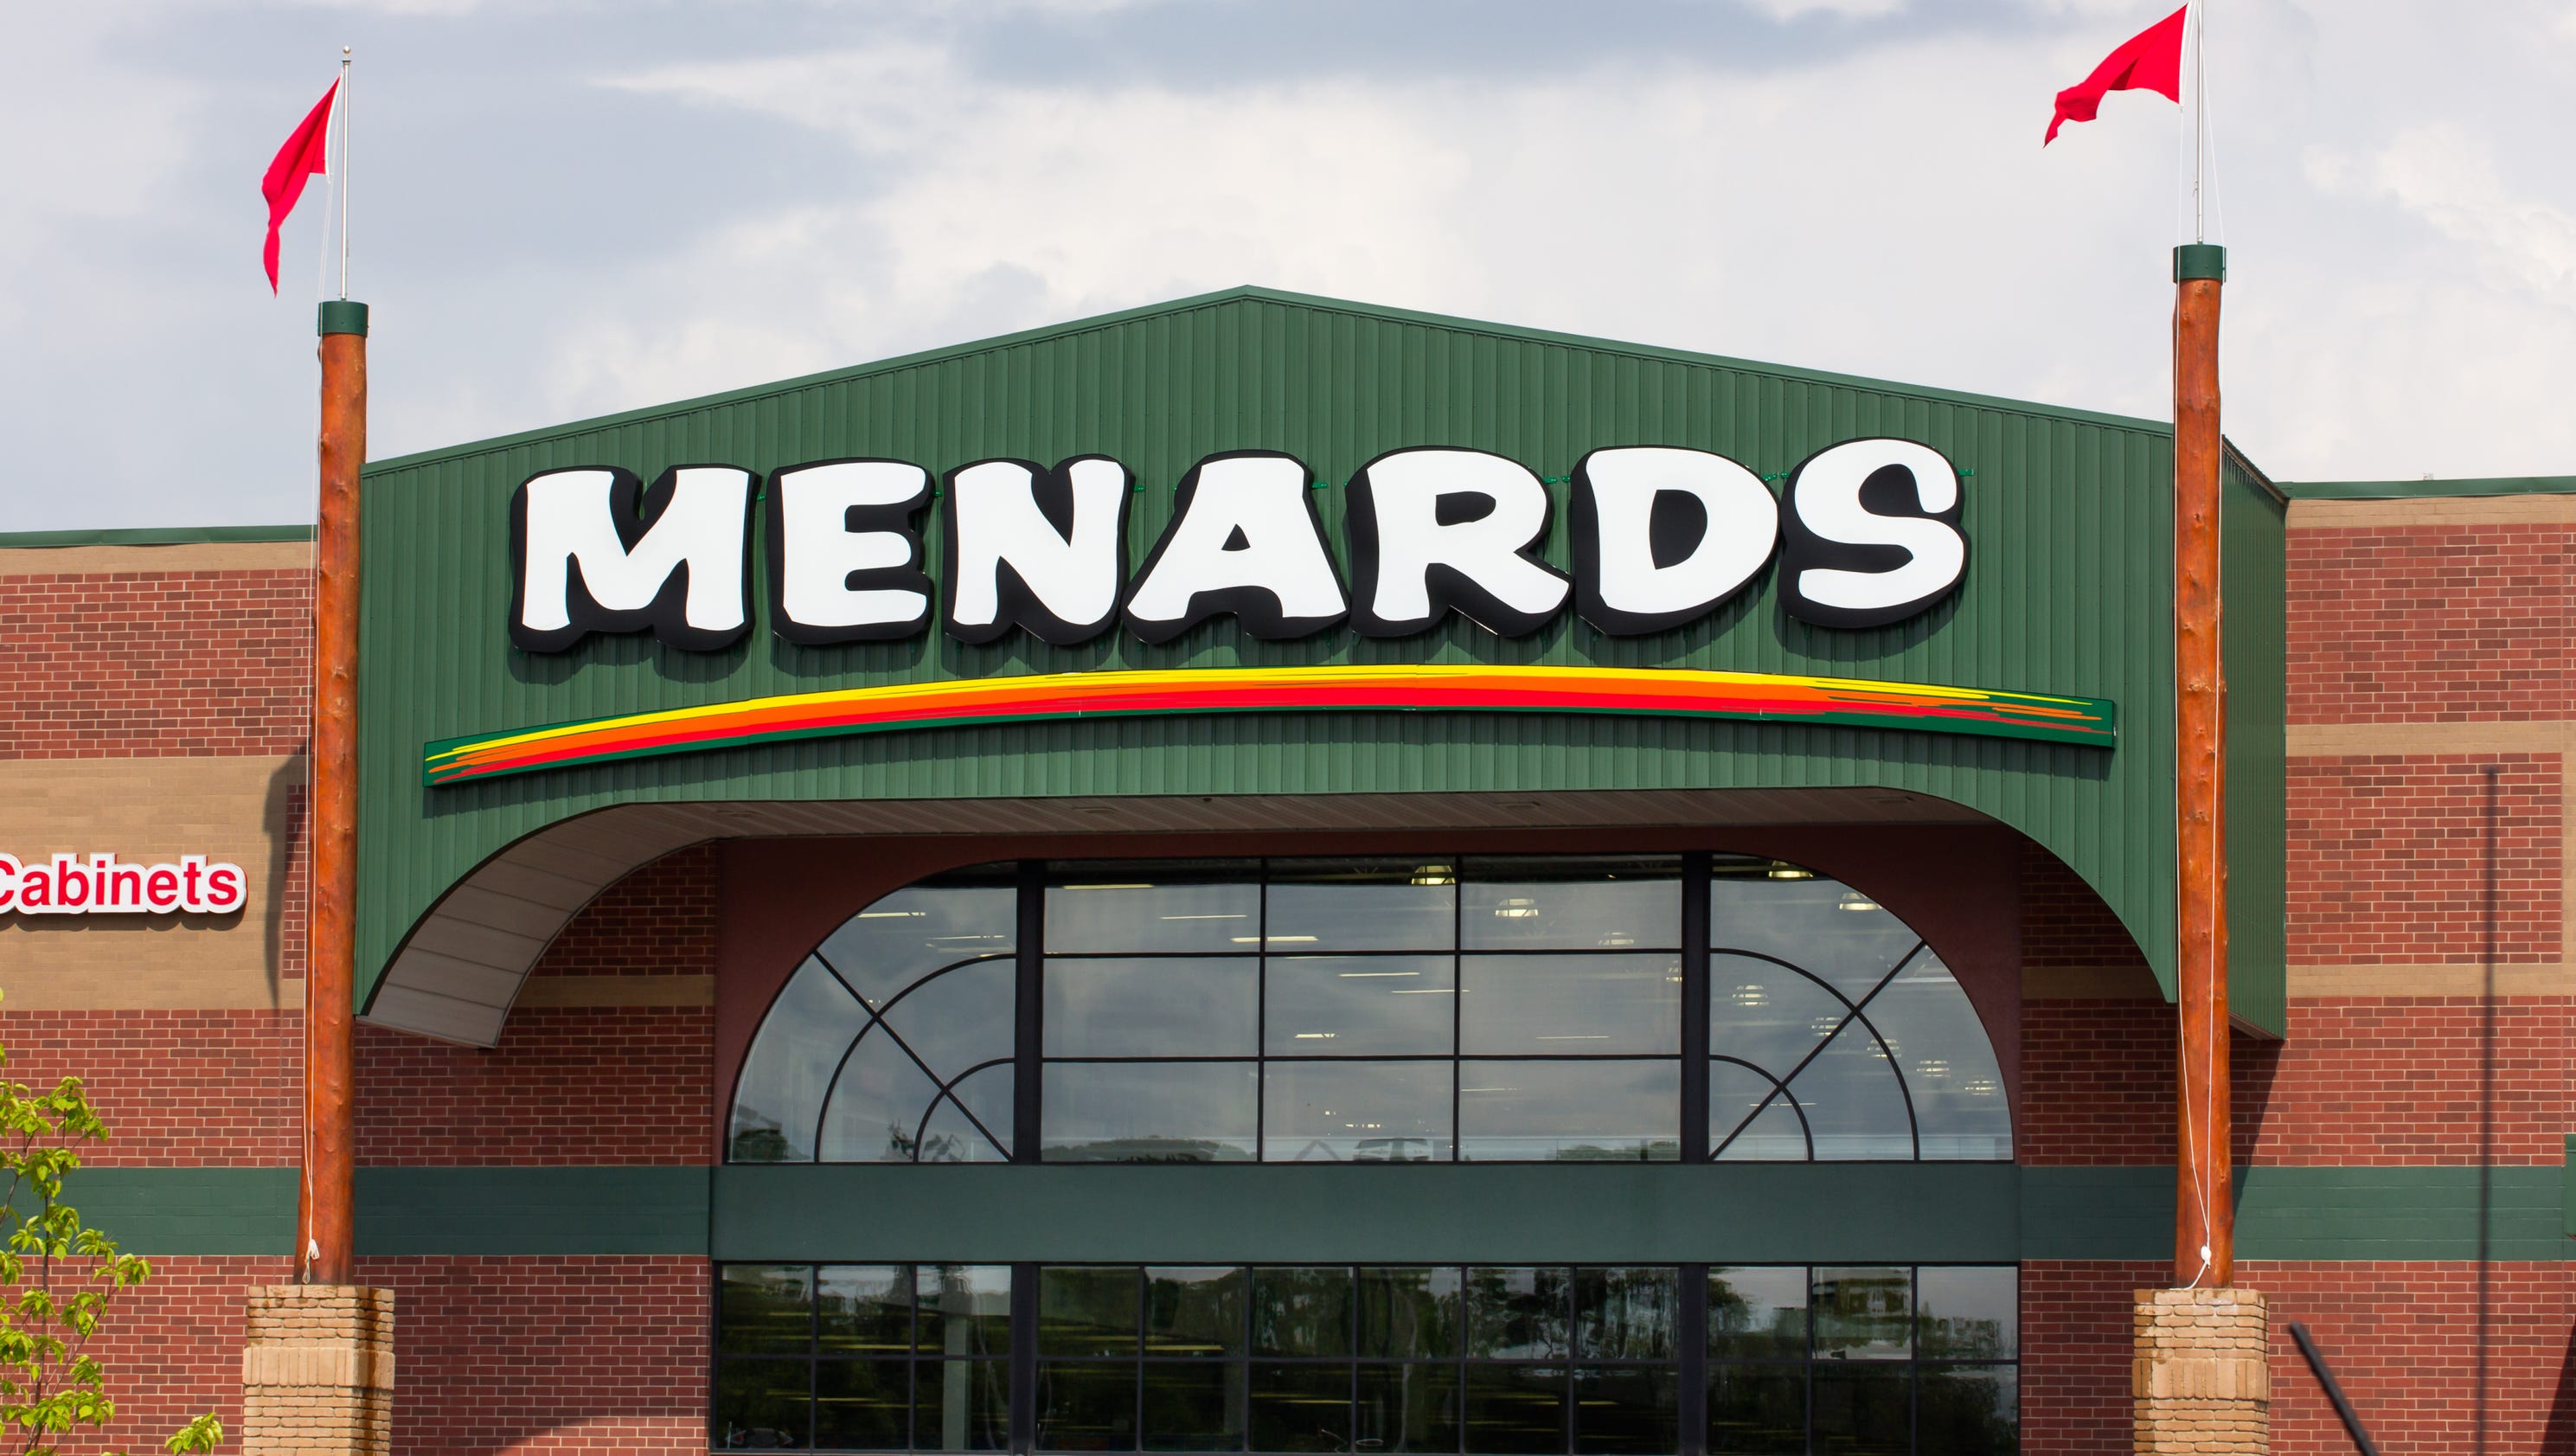 How do you find a local Menards location?